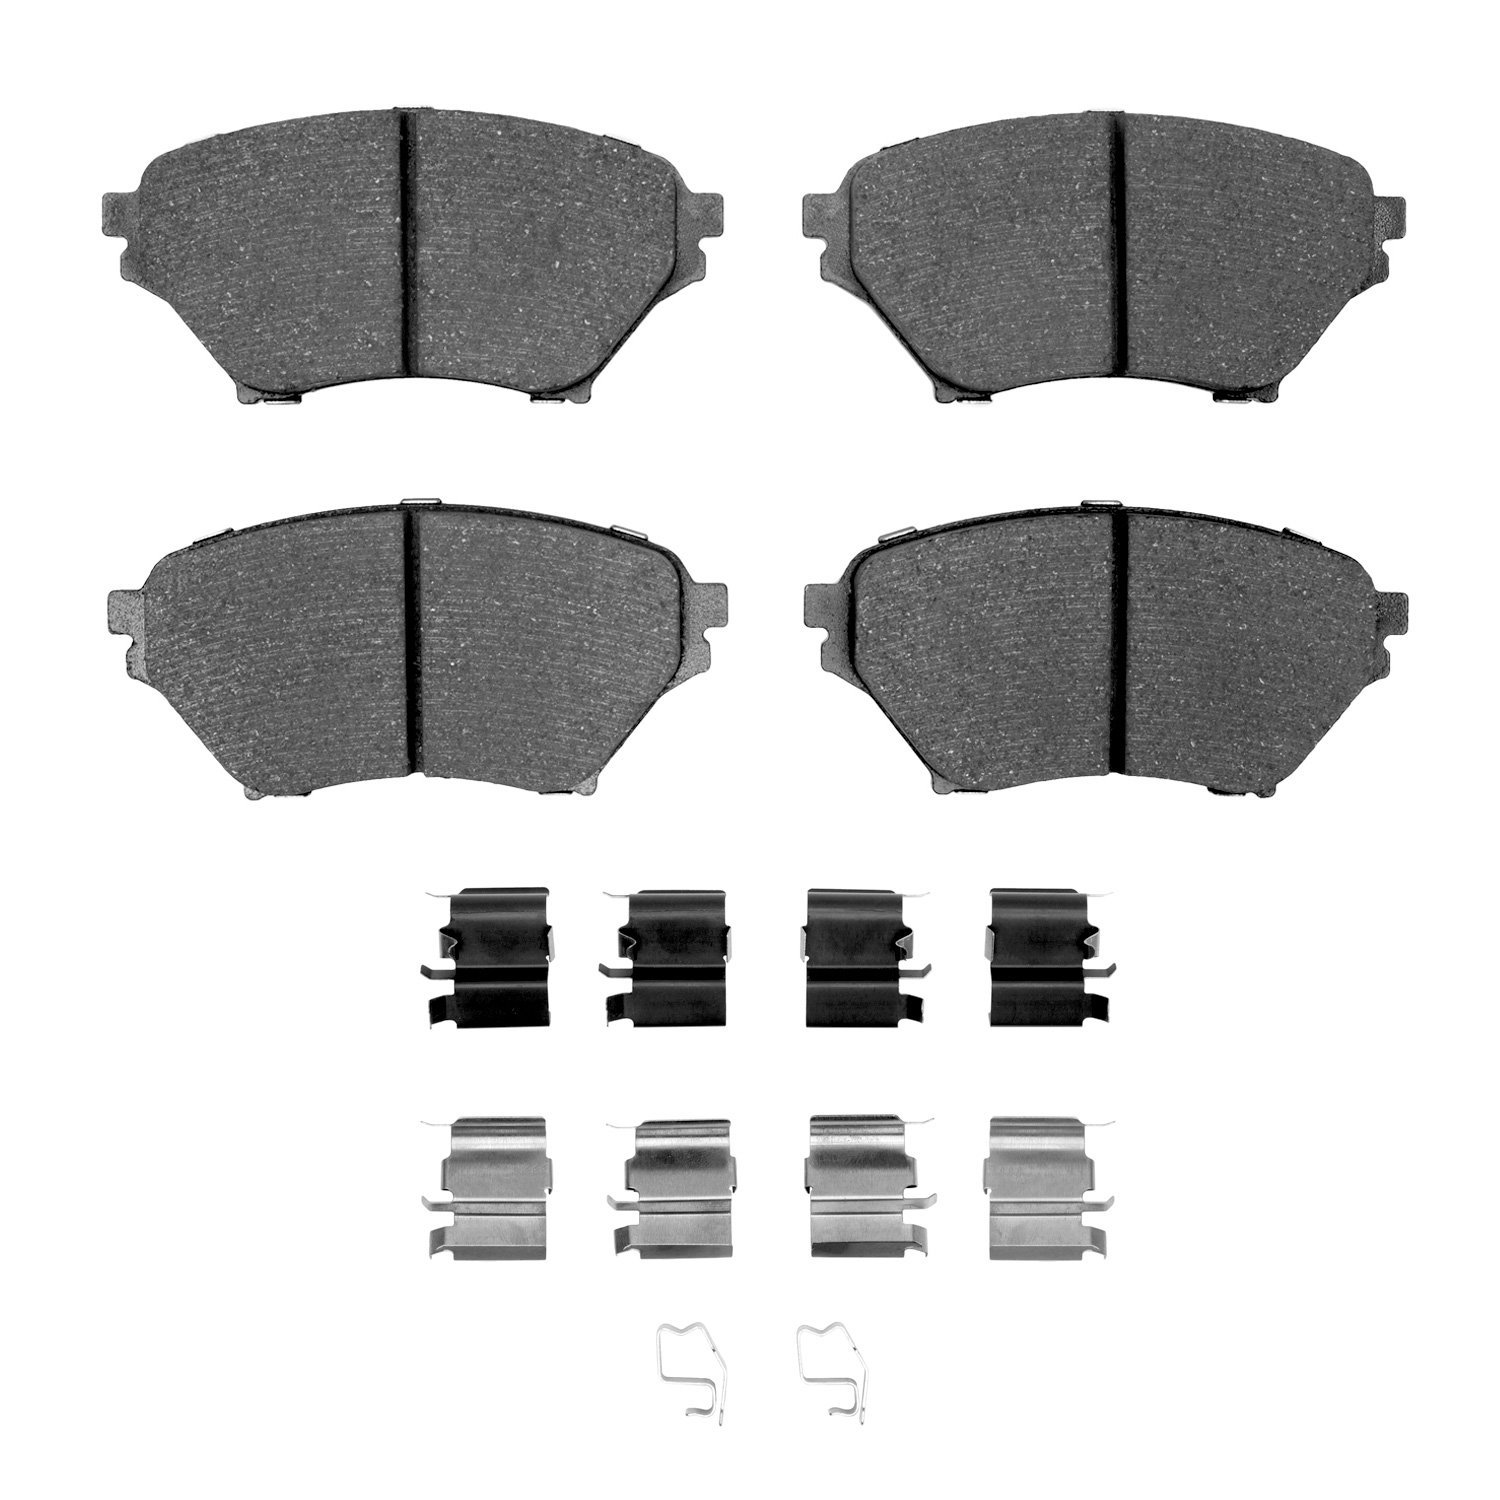 1310-0890-01 3000-Series Ceramic Brake Pads & Hardware Kit, 2001-2005 Ford/Lincoln/Mercury/Mazda, Position: Front